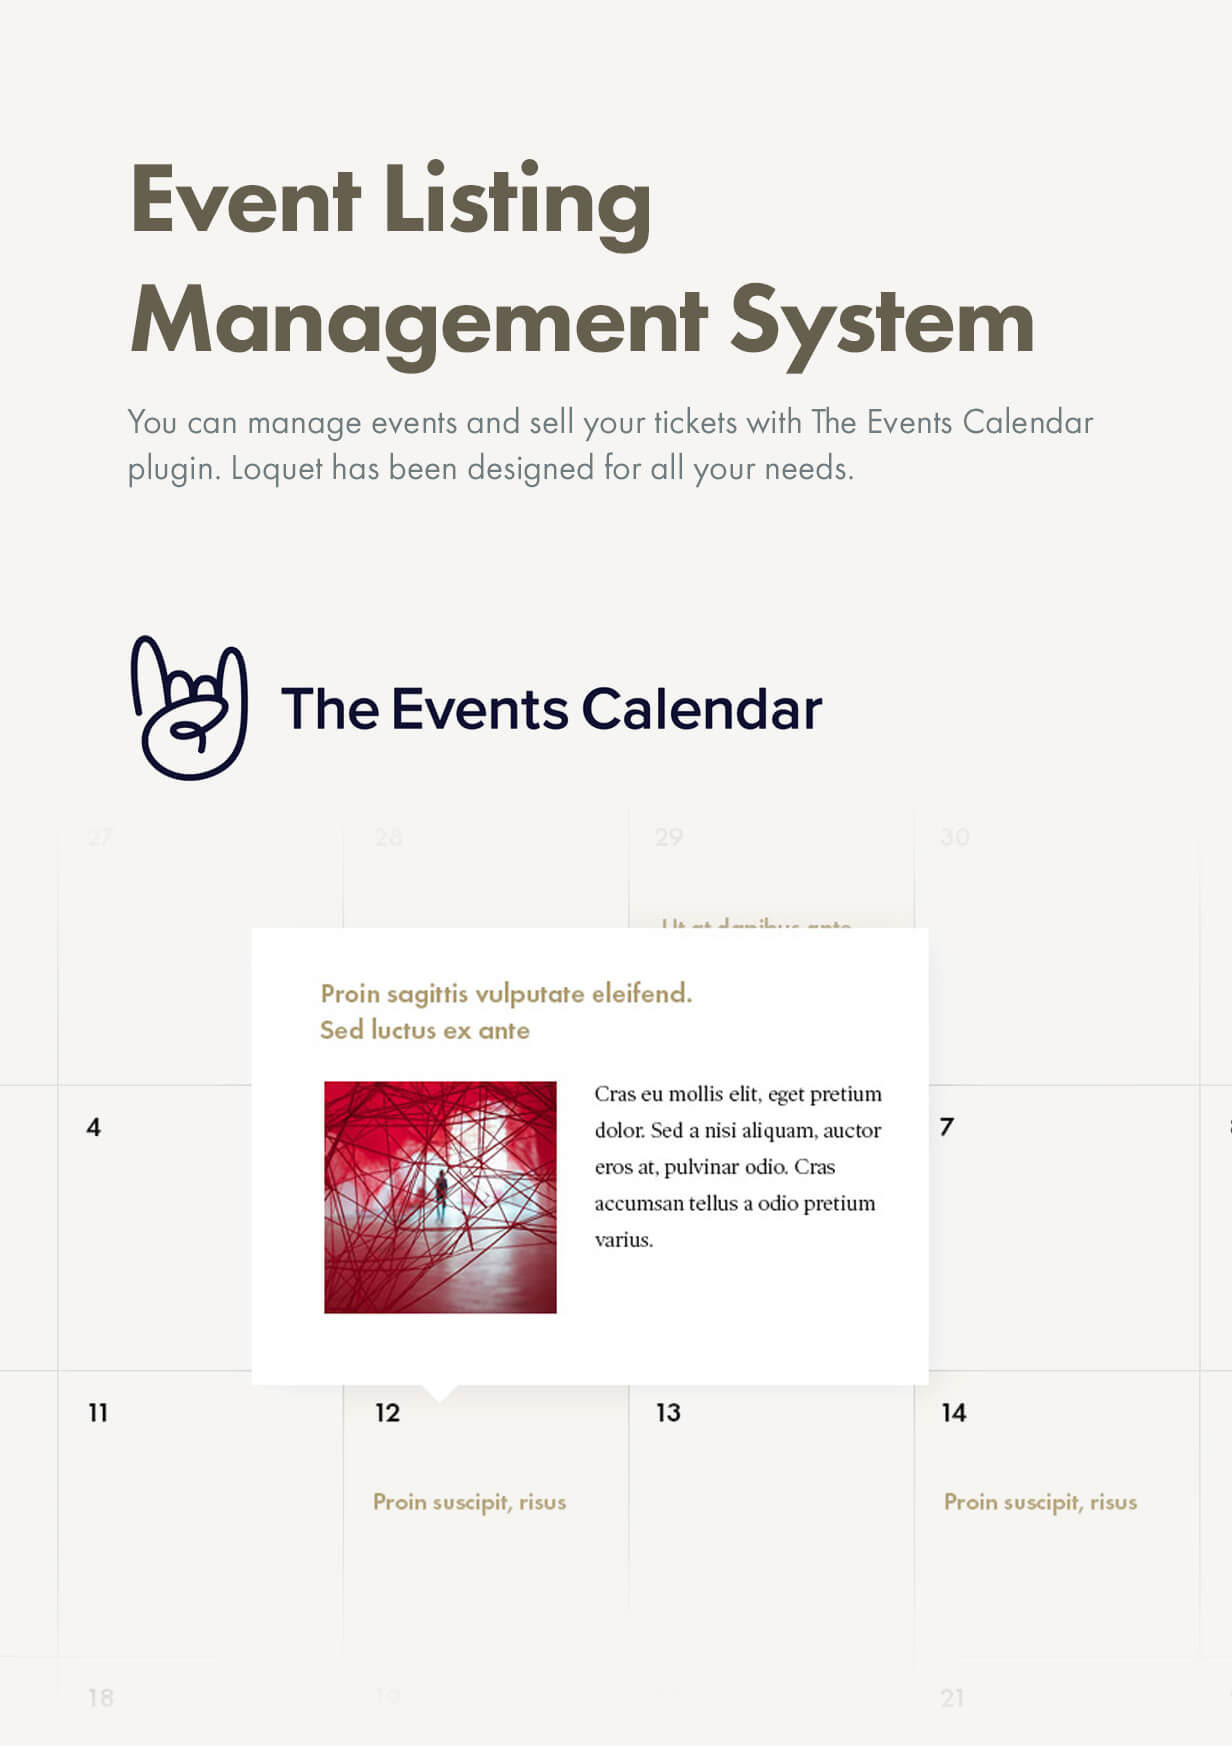 Event listing management system